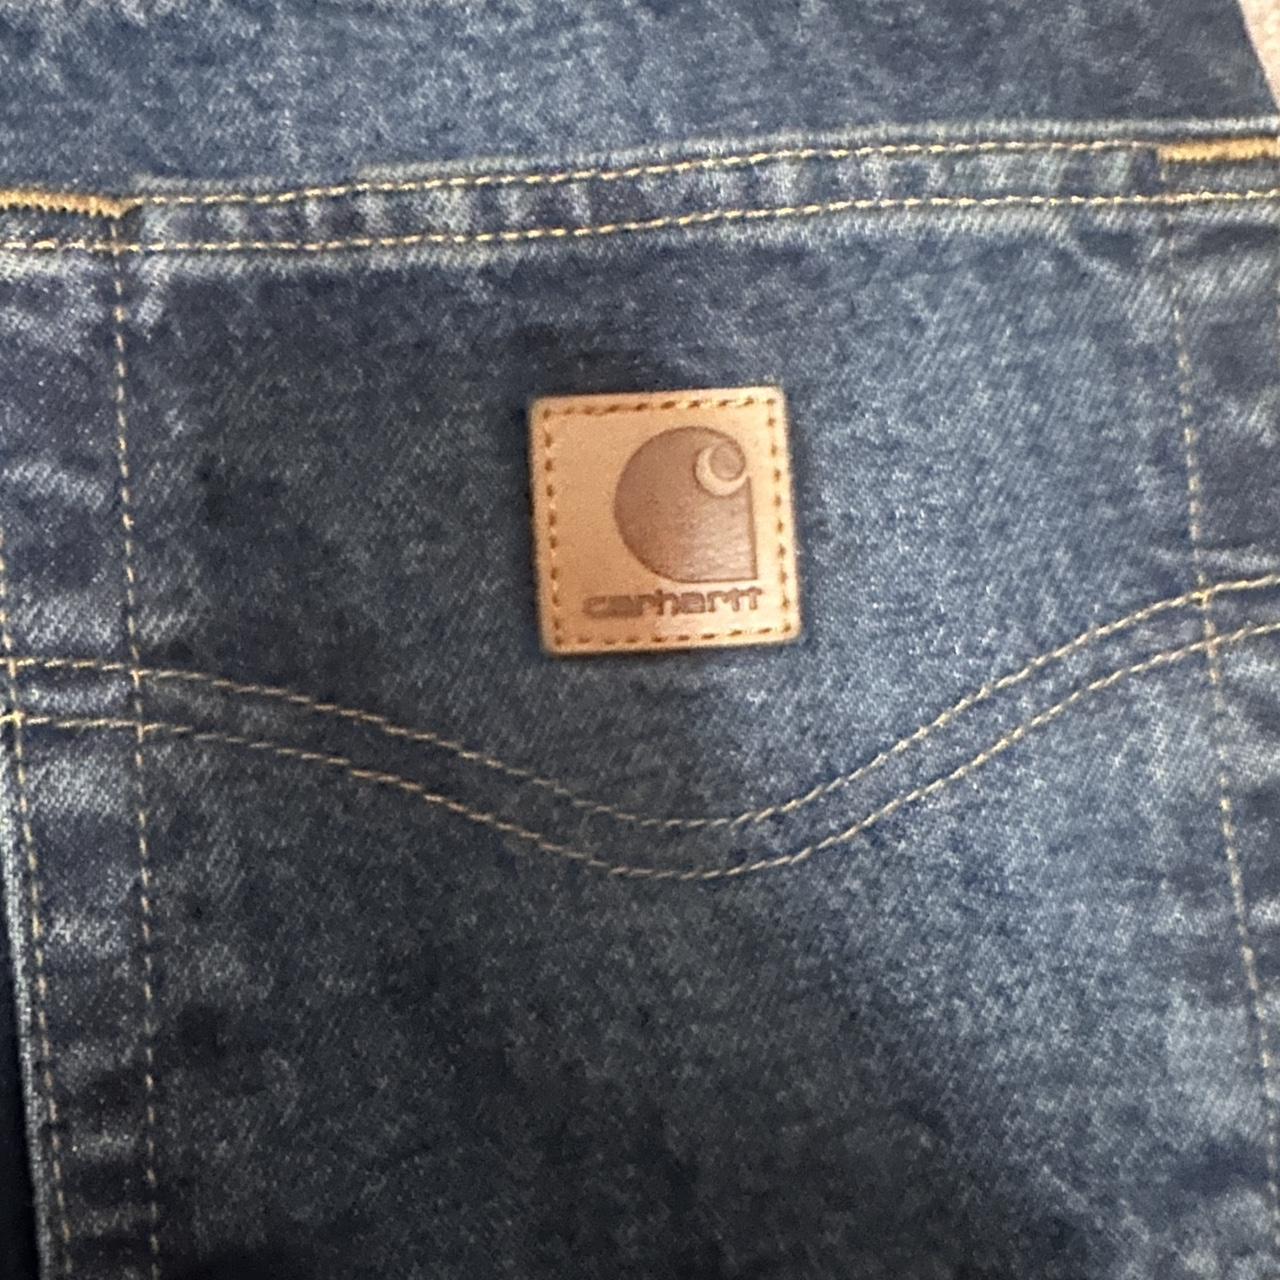 NWT Carhartt jeans kind of baggy 38 x 32... - Depop